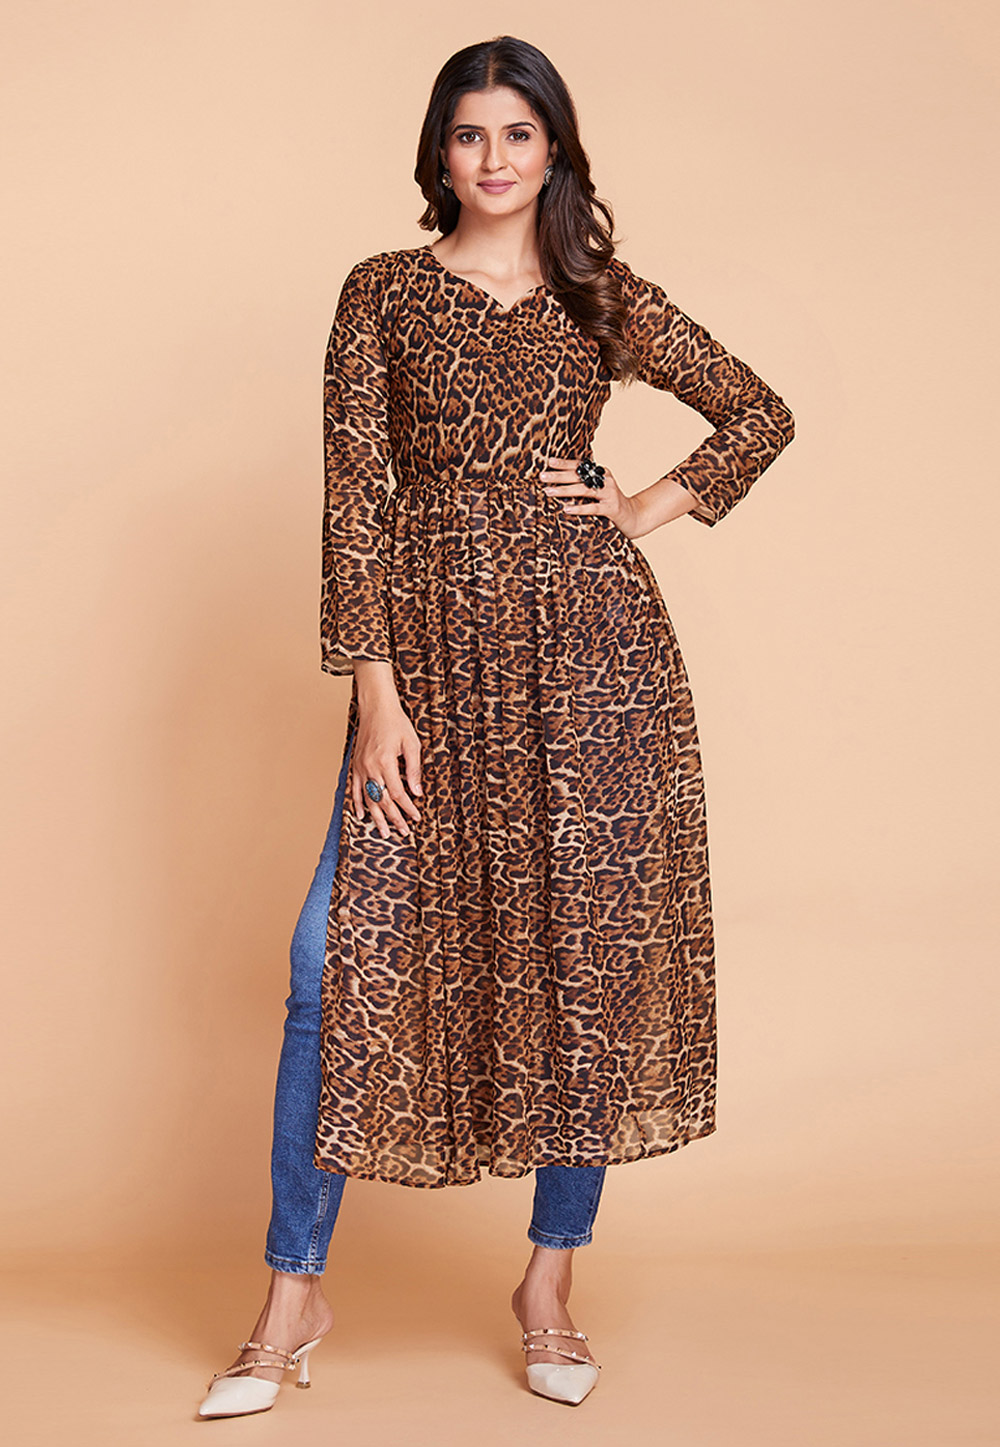 tiger print dress\kurti/suit design| cheetah print maxi\skirtleopard print  dress designs - YouTube